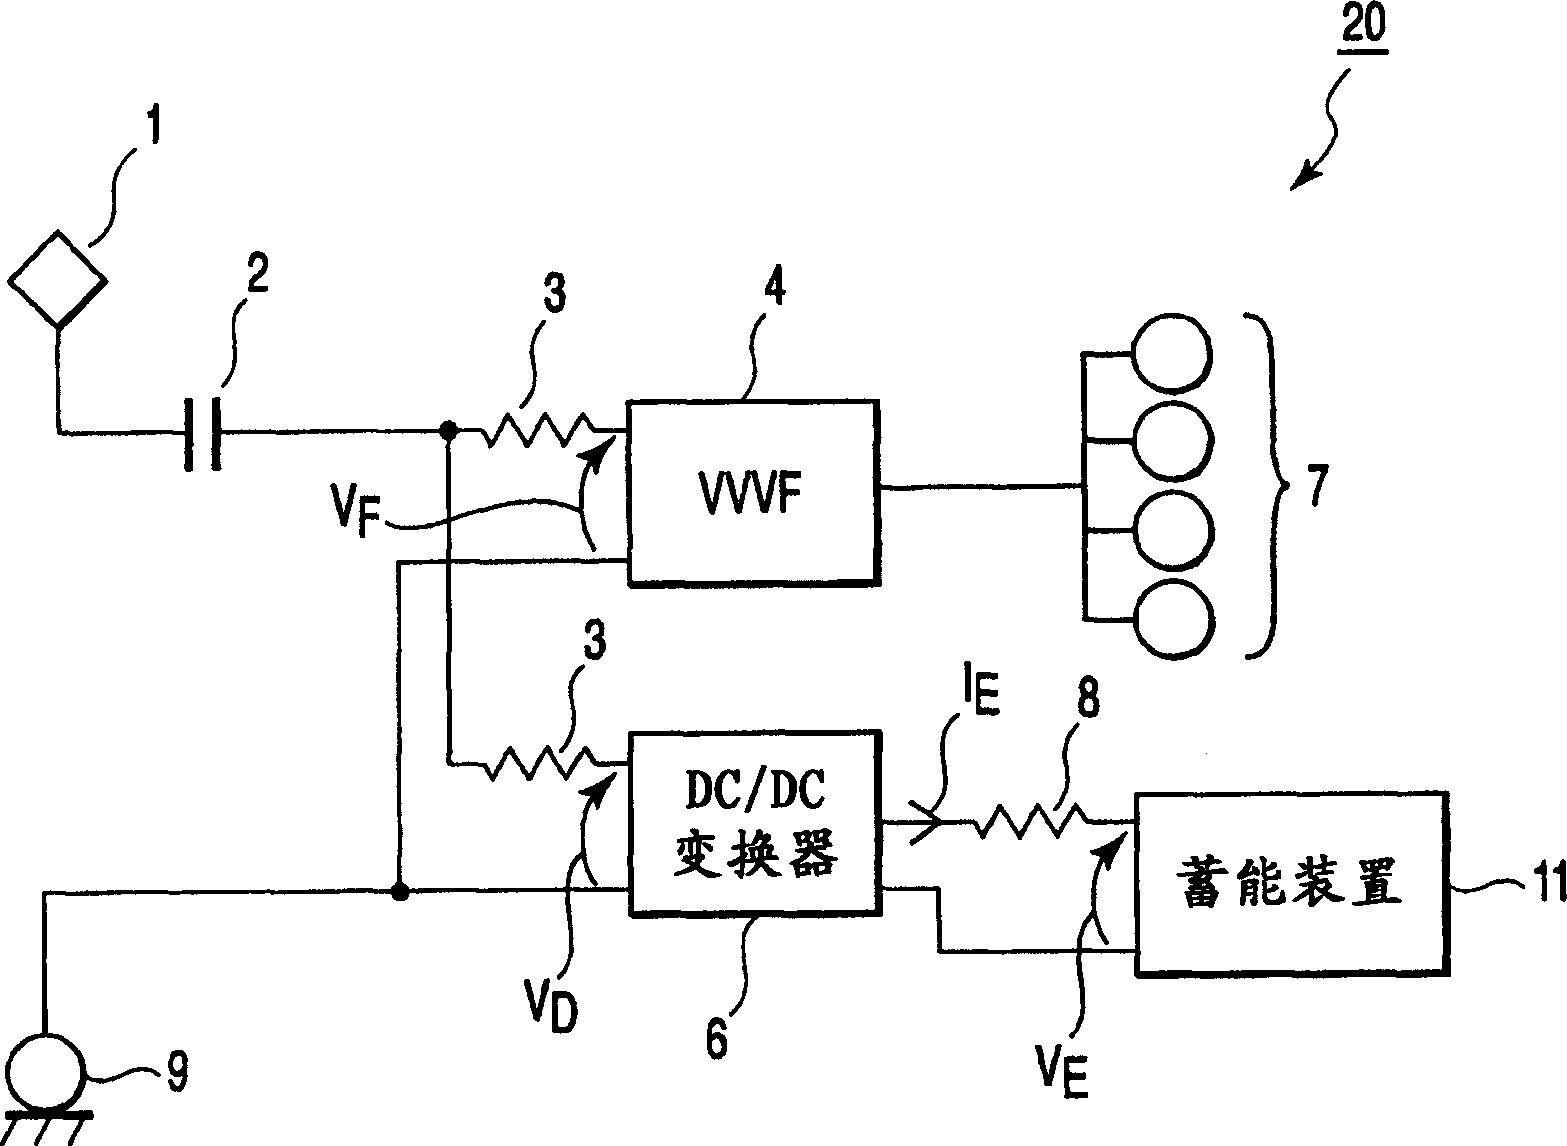 Control apparatus for an eletric locomotive